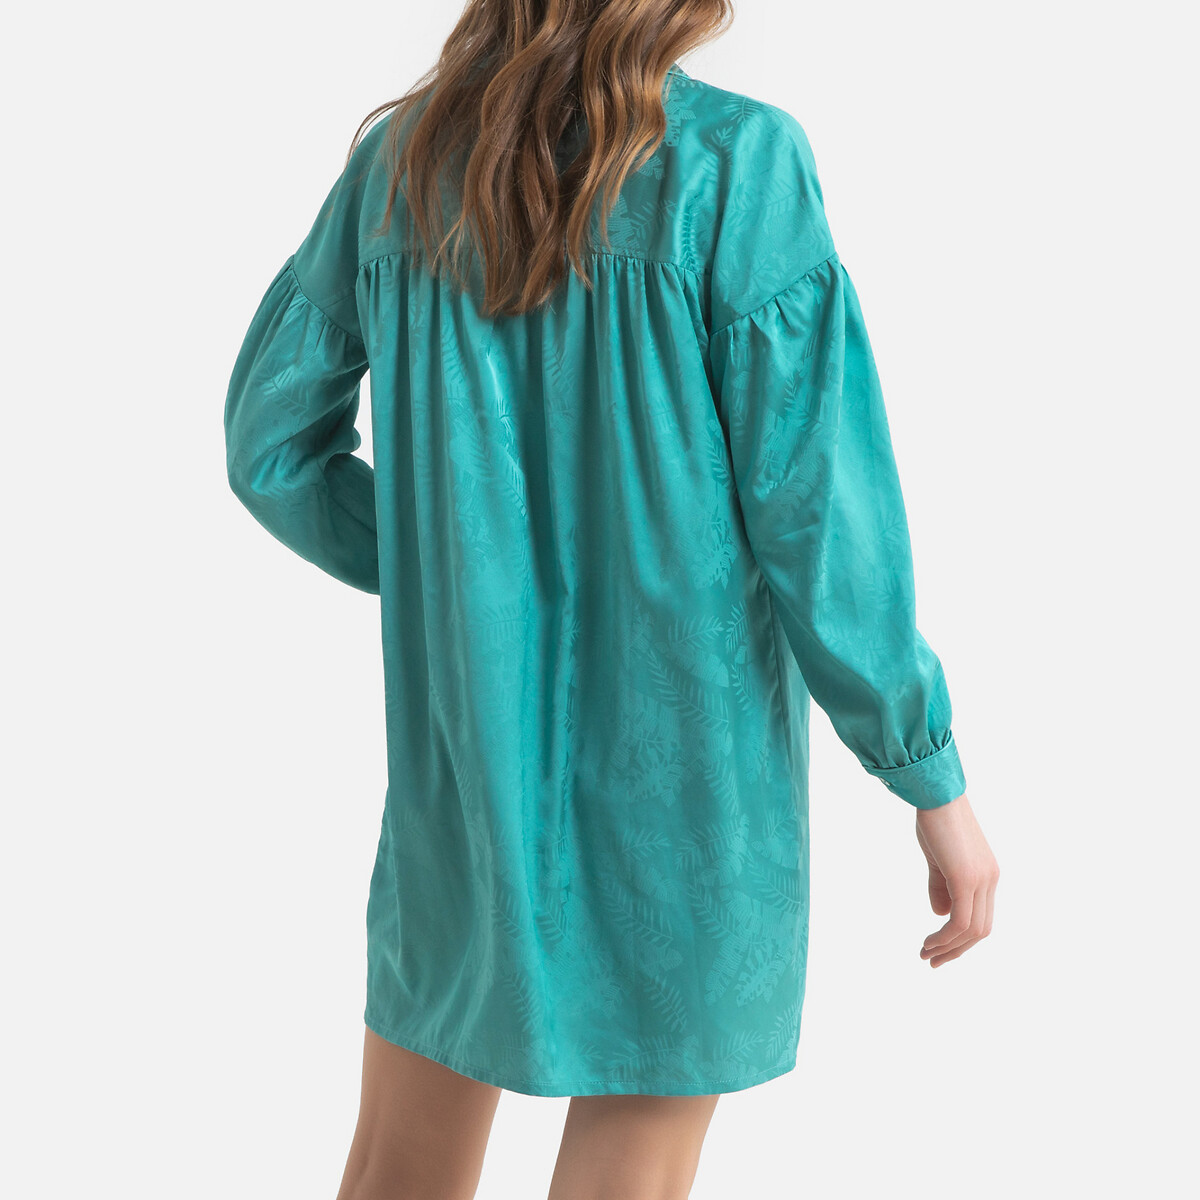 Ночная LaRedoute Рубашка в форме пижамы из сатина 40 (FR) - 46 (RUS) зеленый, размер 40 (FR) - 46 (RUS) Рубашка в форме пижамы из сатина 40 (FR) - 46 (RUS) зеленый - фото 4